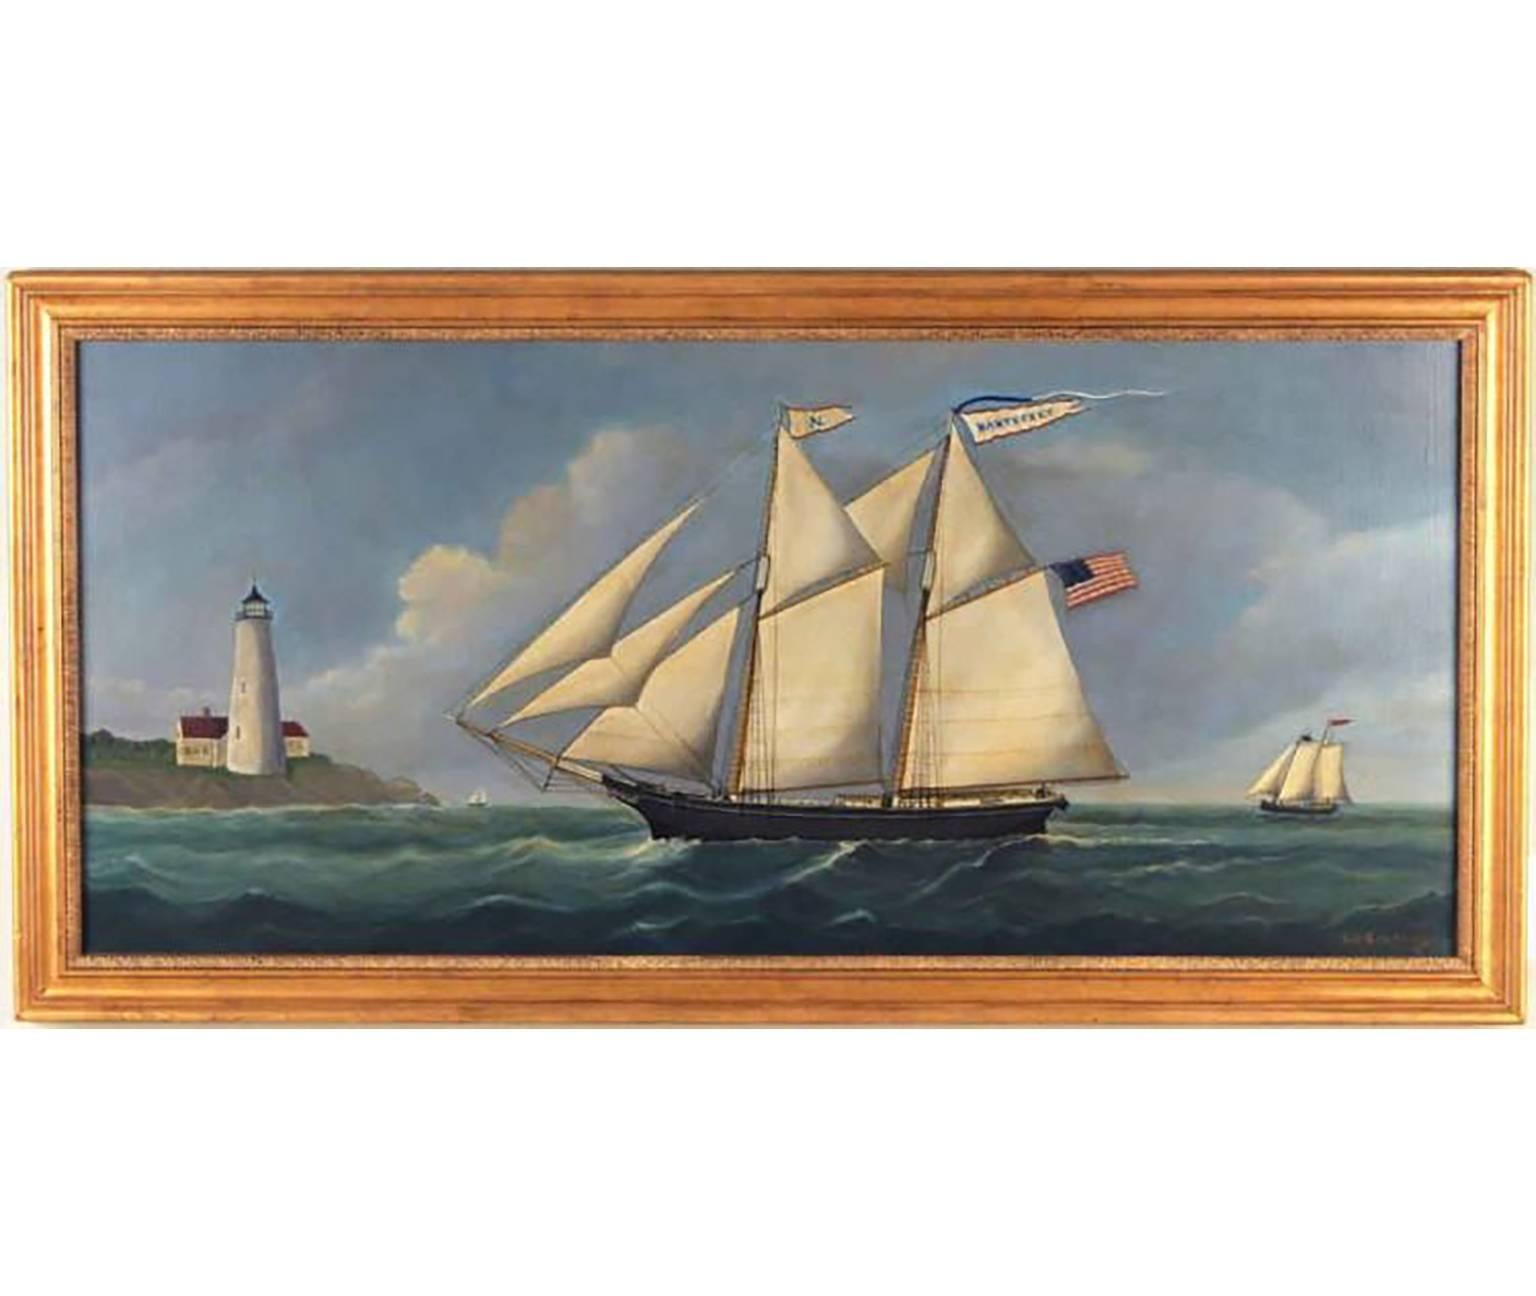 Reginald Eugene Nickerson Landscape Painting - Reginald E. Nickerson Oil Painting Entitled “Nantucket” (Nautical / Marine Scene